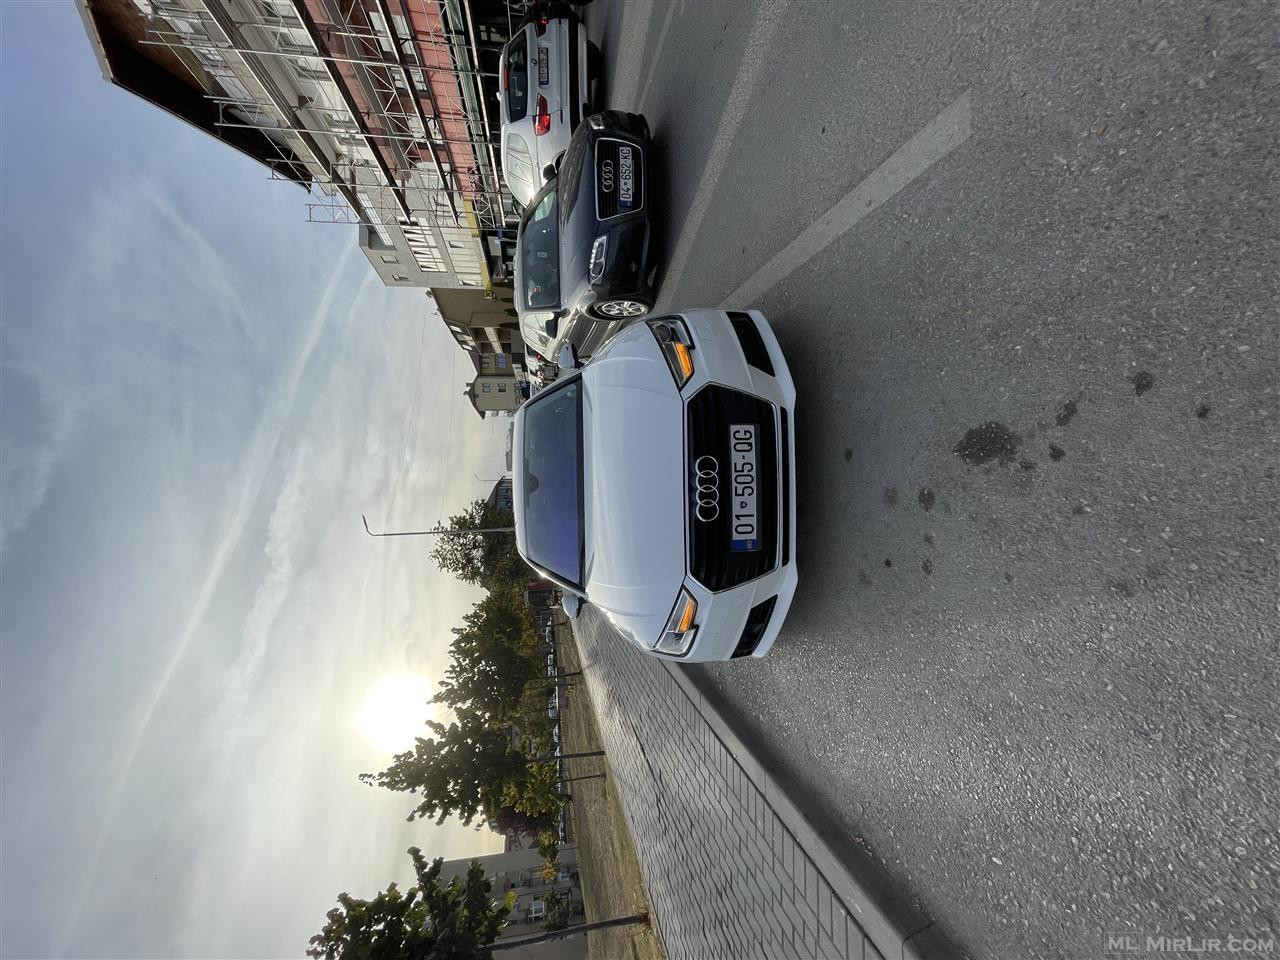 Audi A4 2016